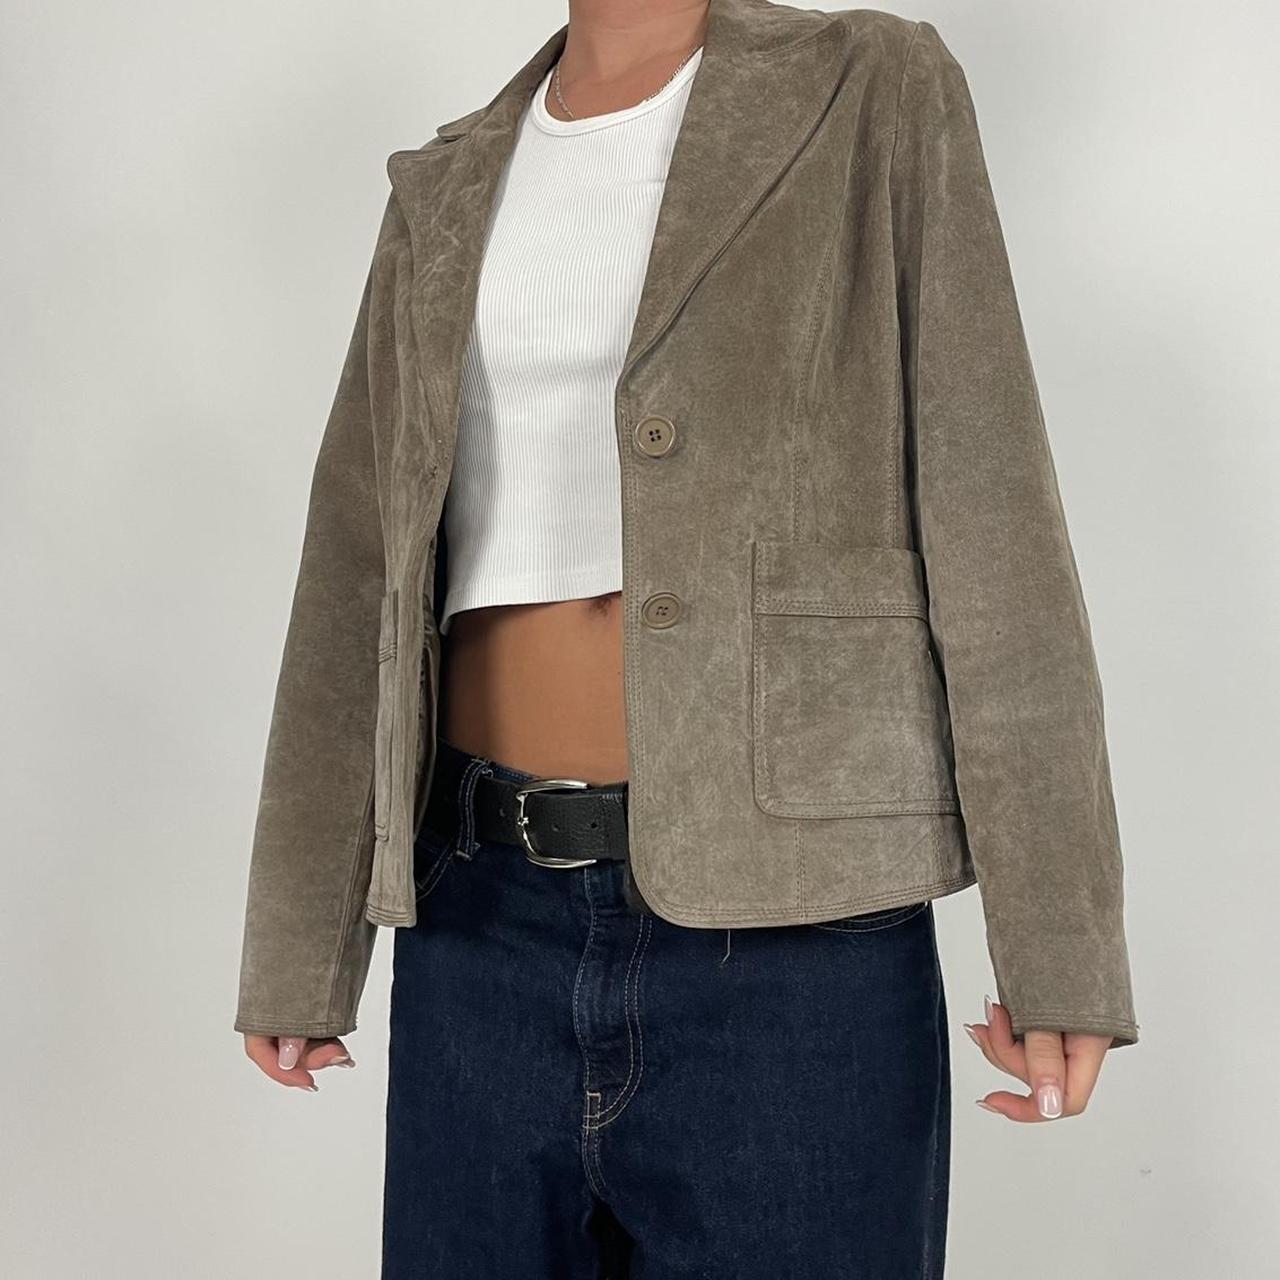 Light brown suede jacket seen on size 8 - Depop